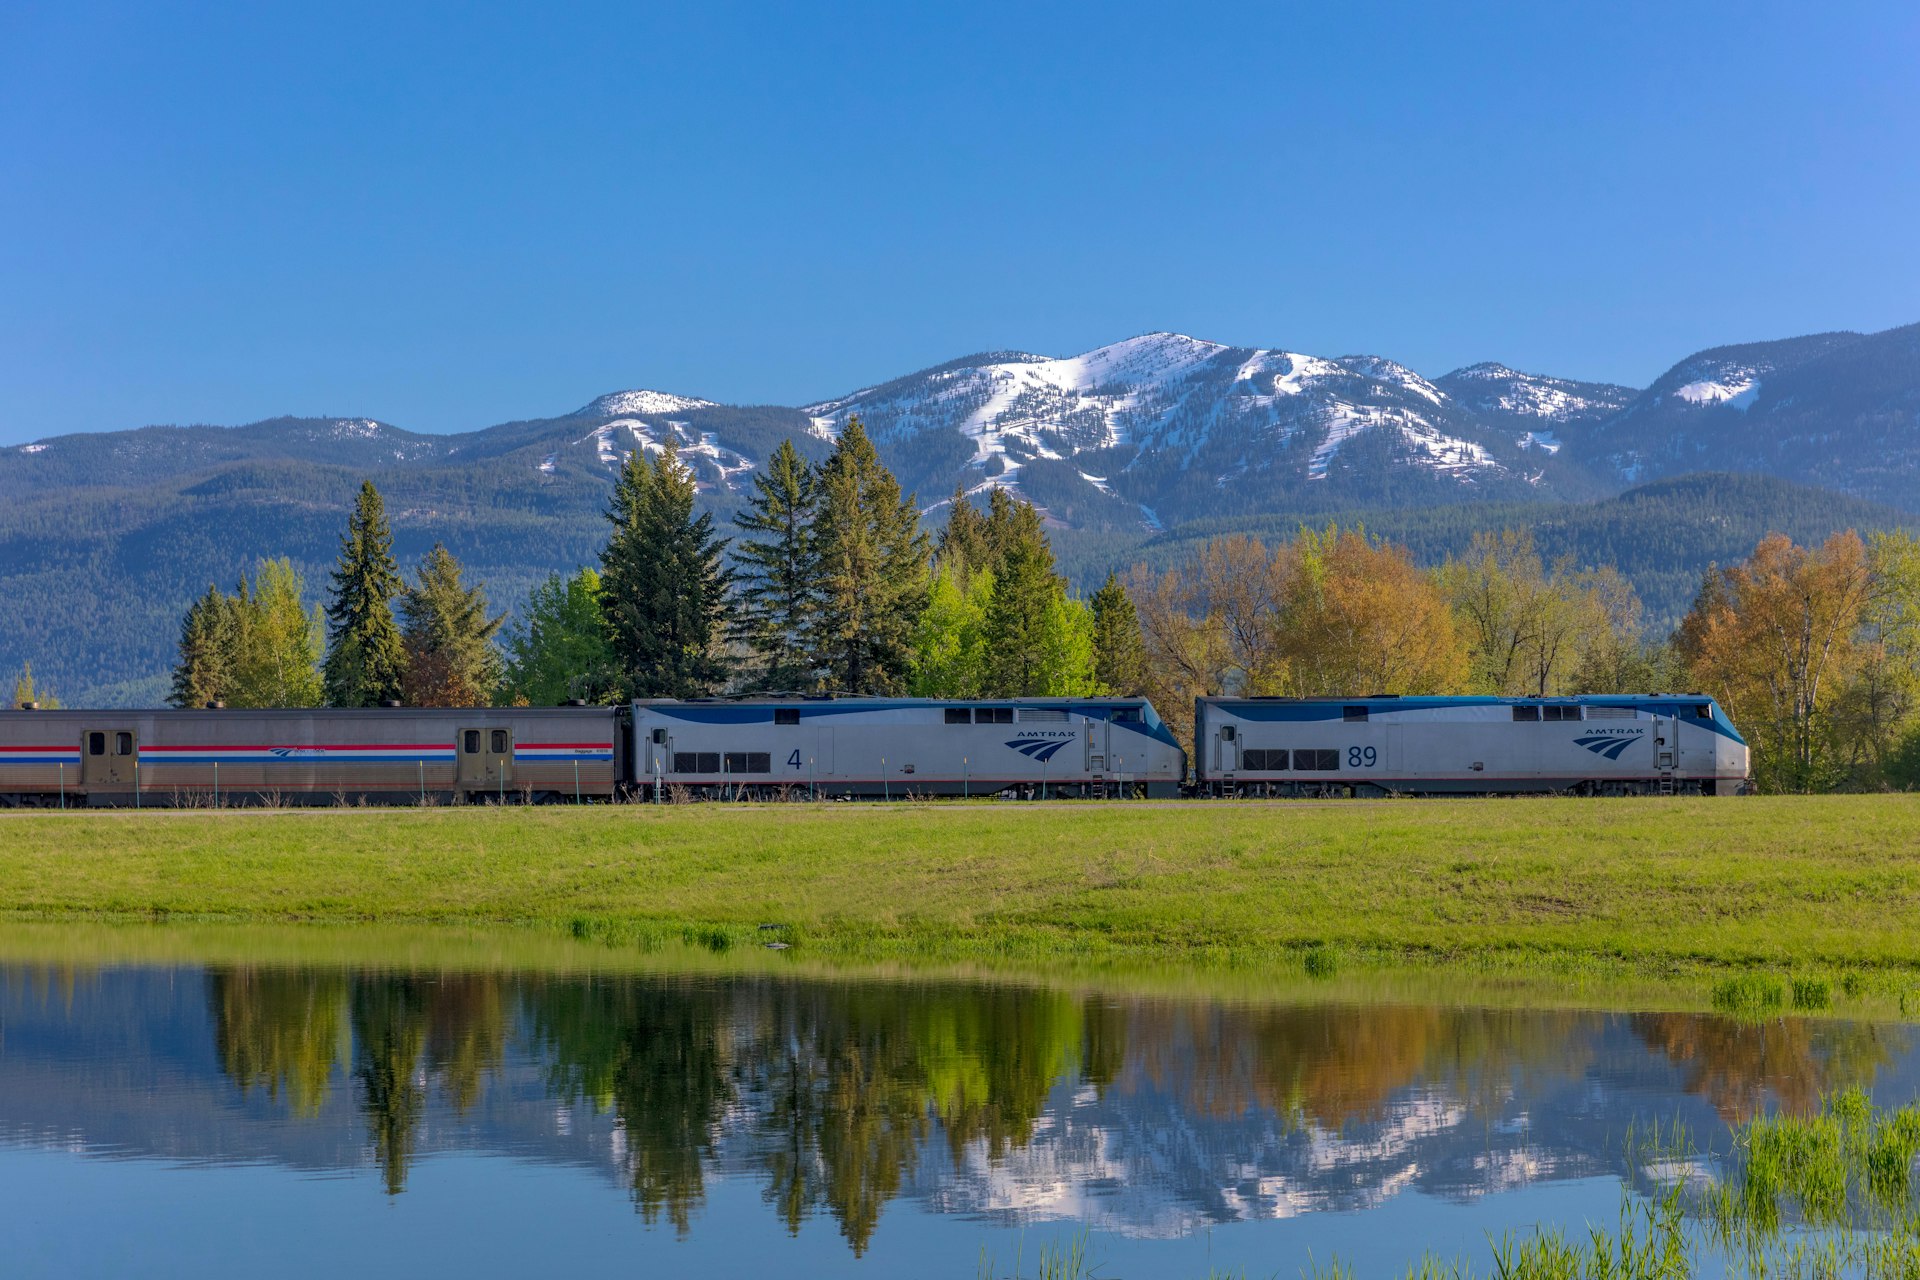 Empire Builder AMTRAK passenger train rolls into Whitefish, Montana, USA